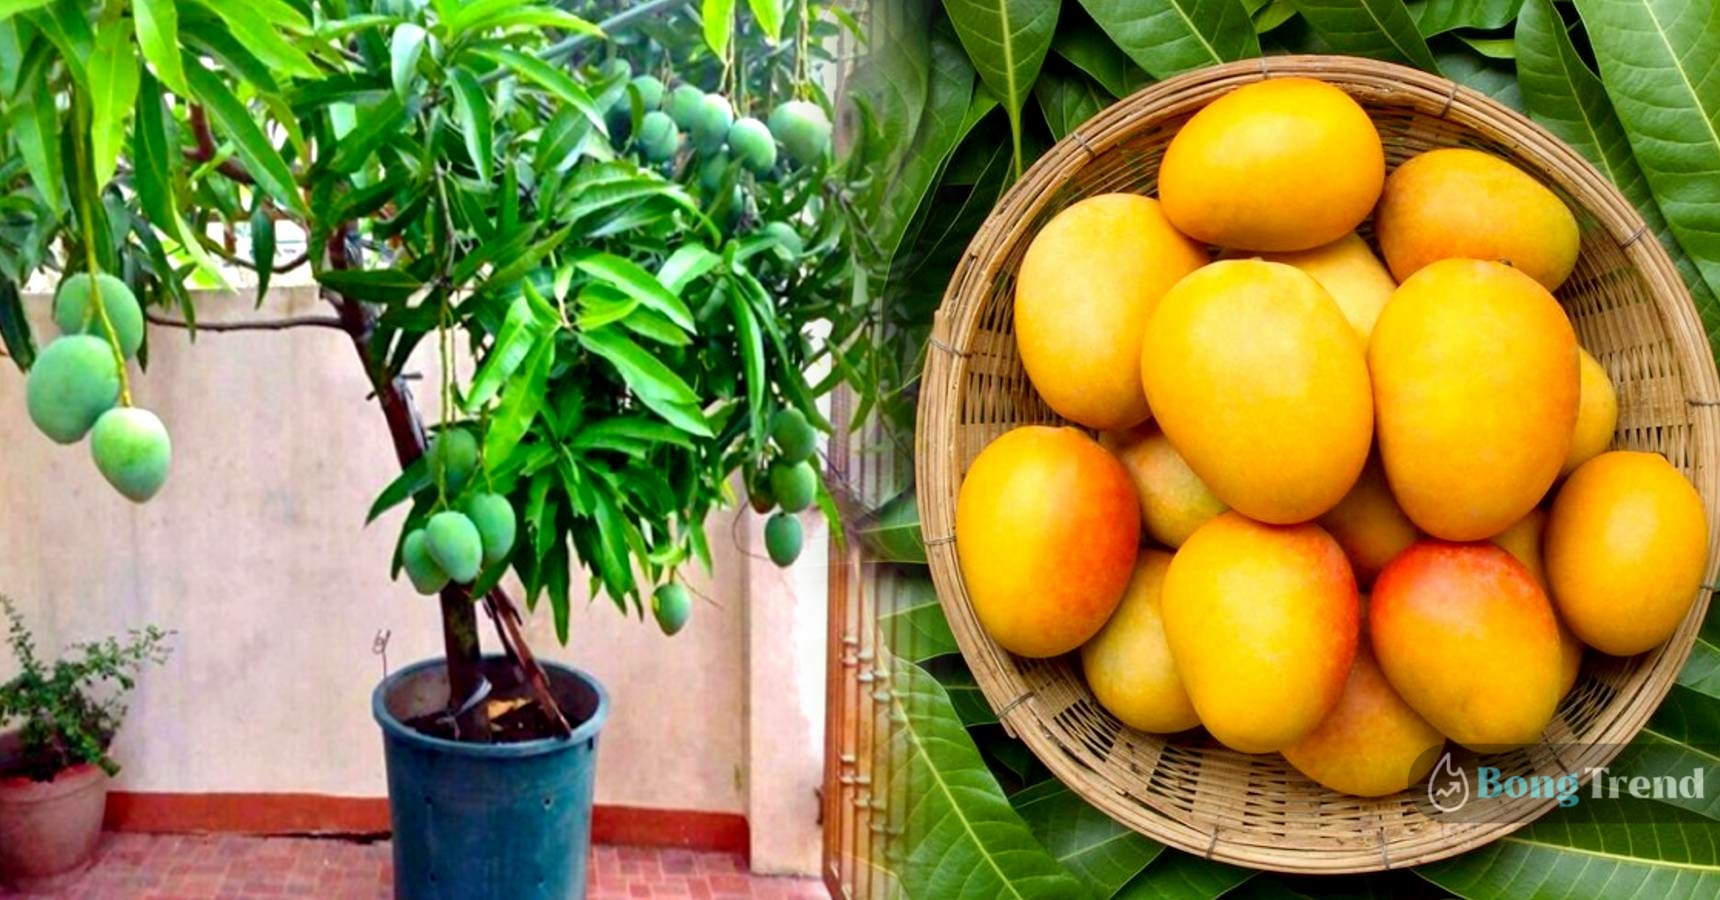 How to do mango tree farming at home